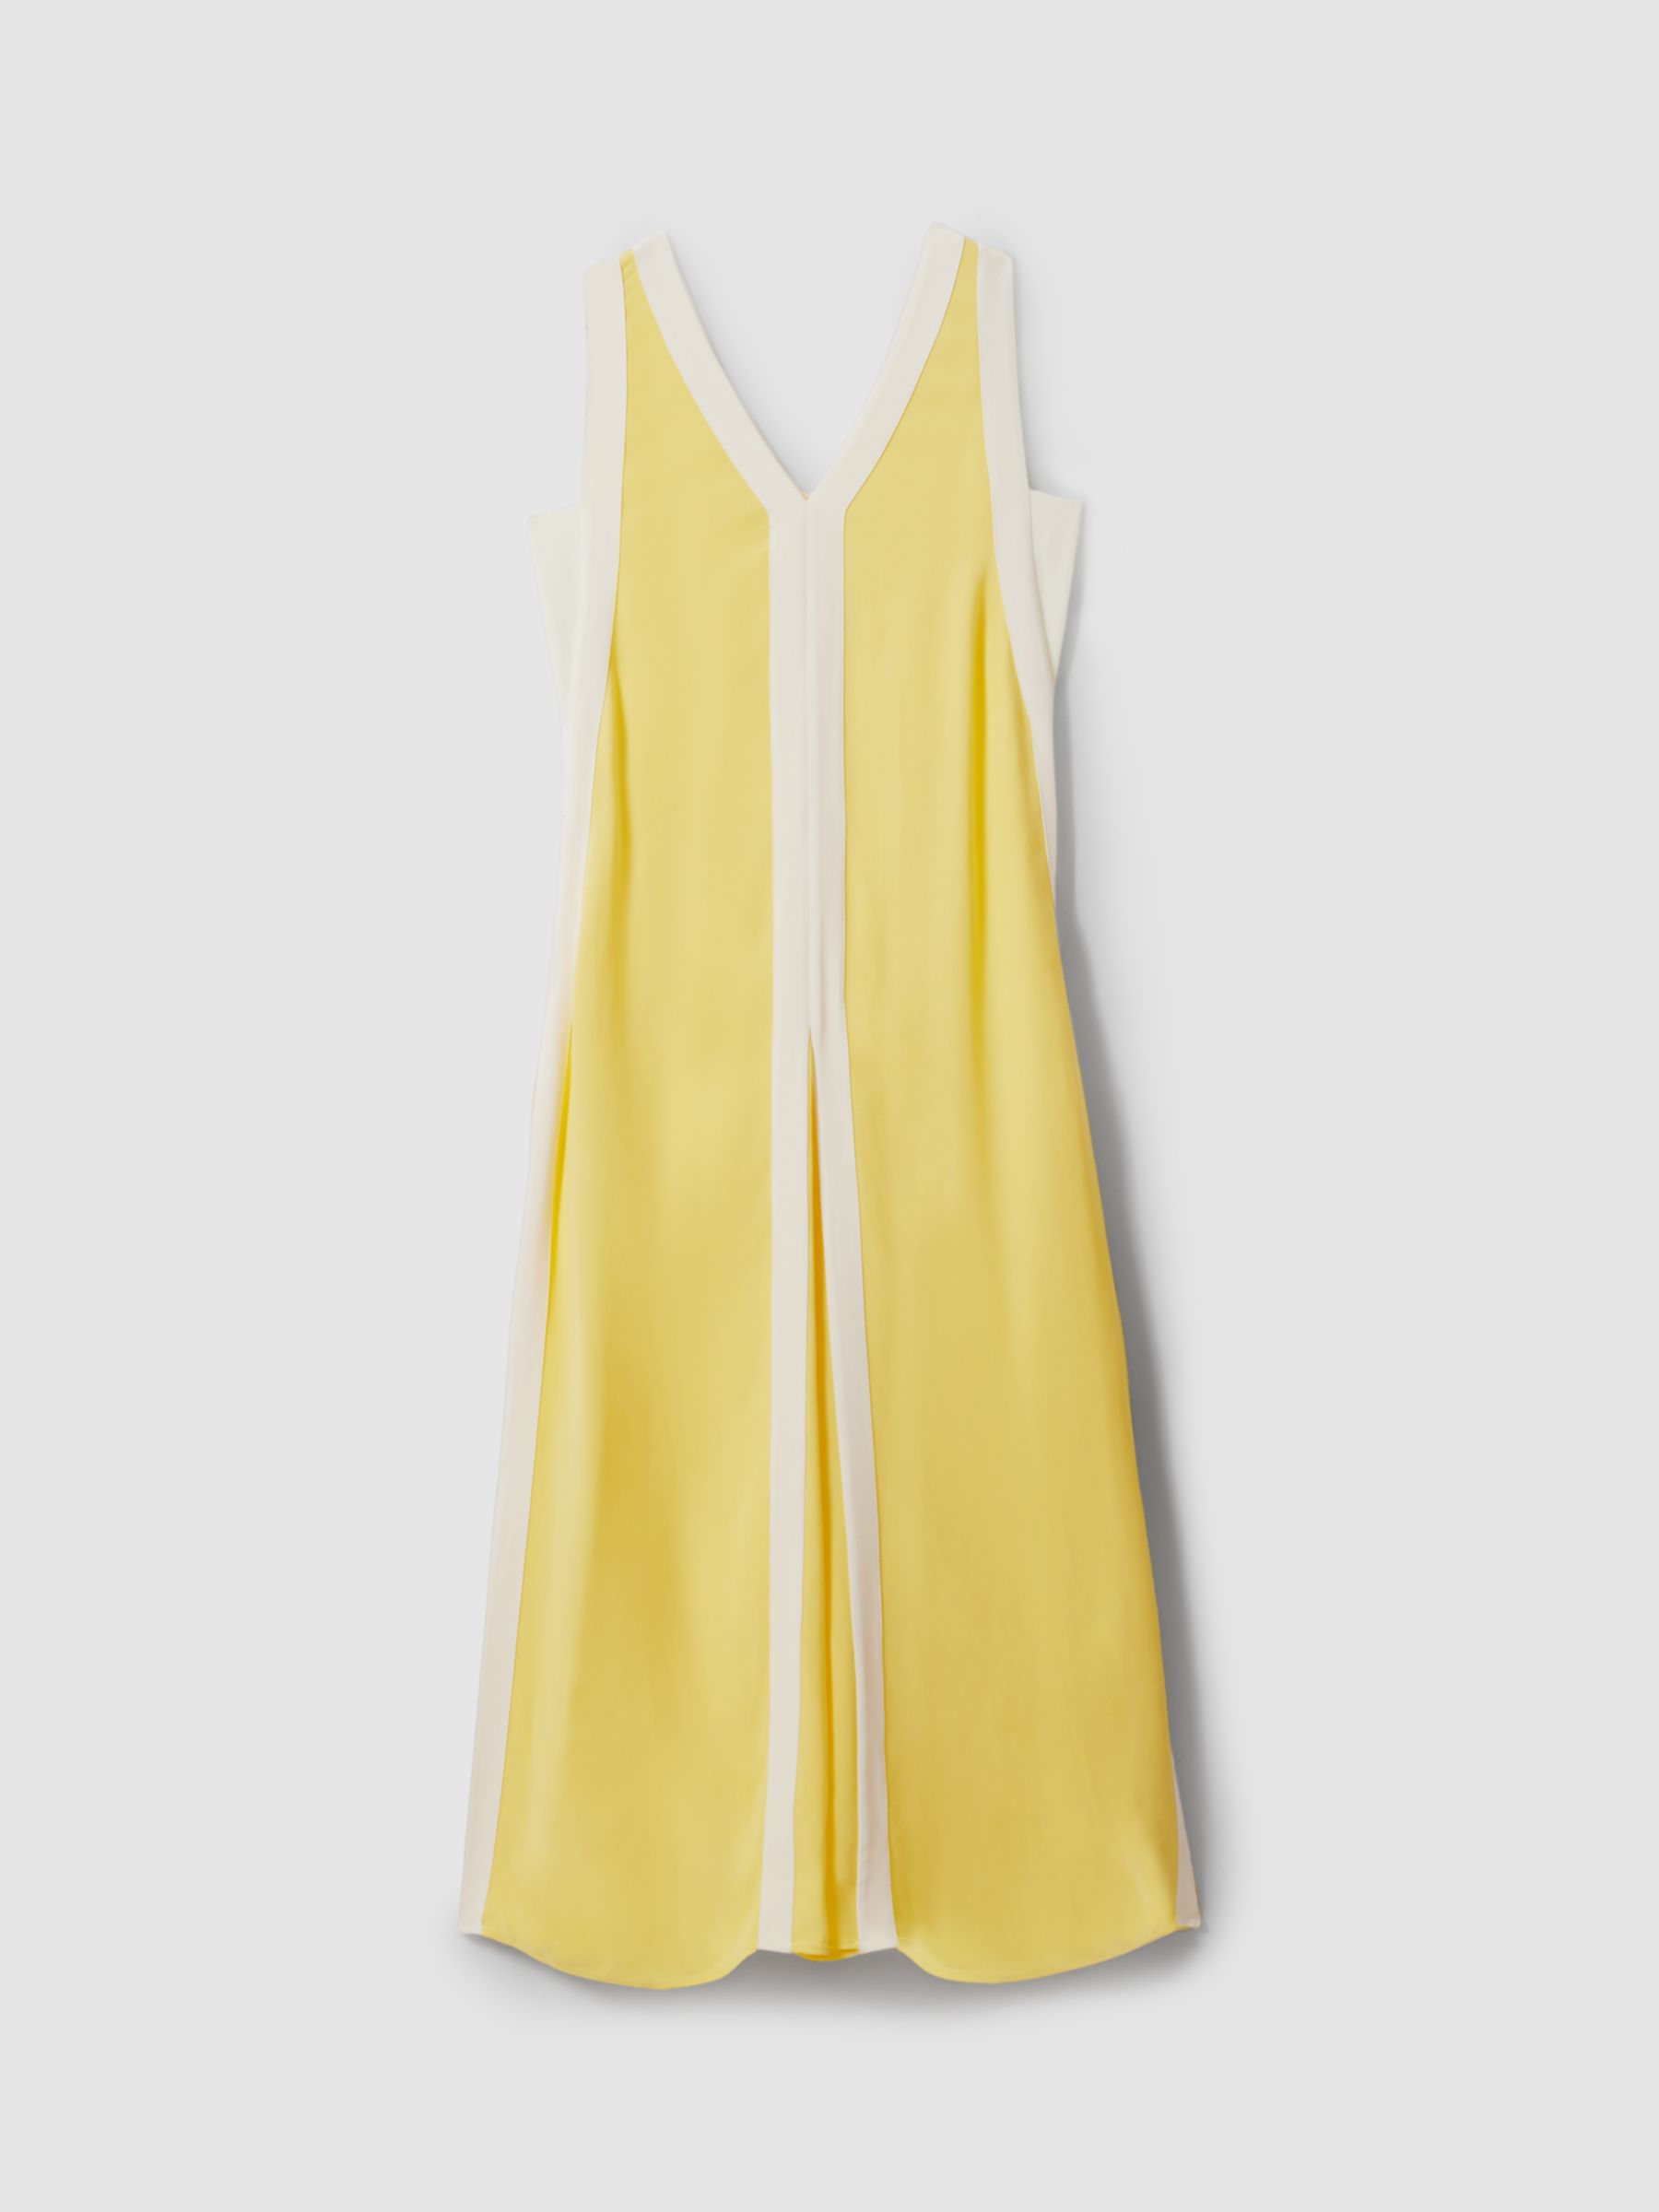 Reiss Rae Colourblock Maxi Dress, Yellow/Cream, 6